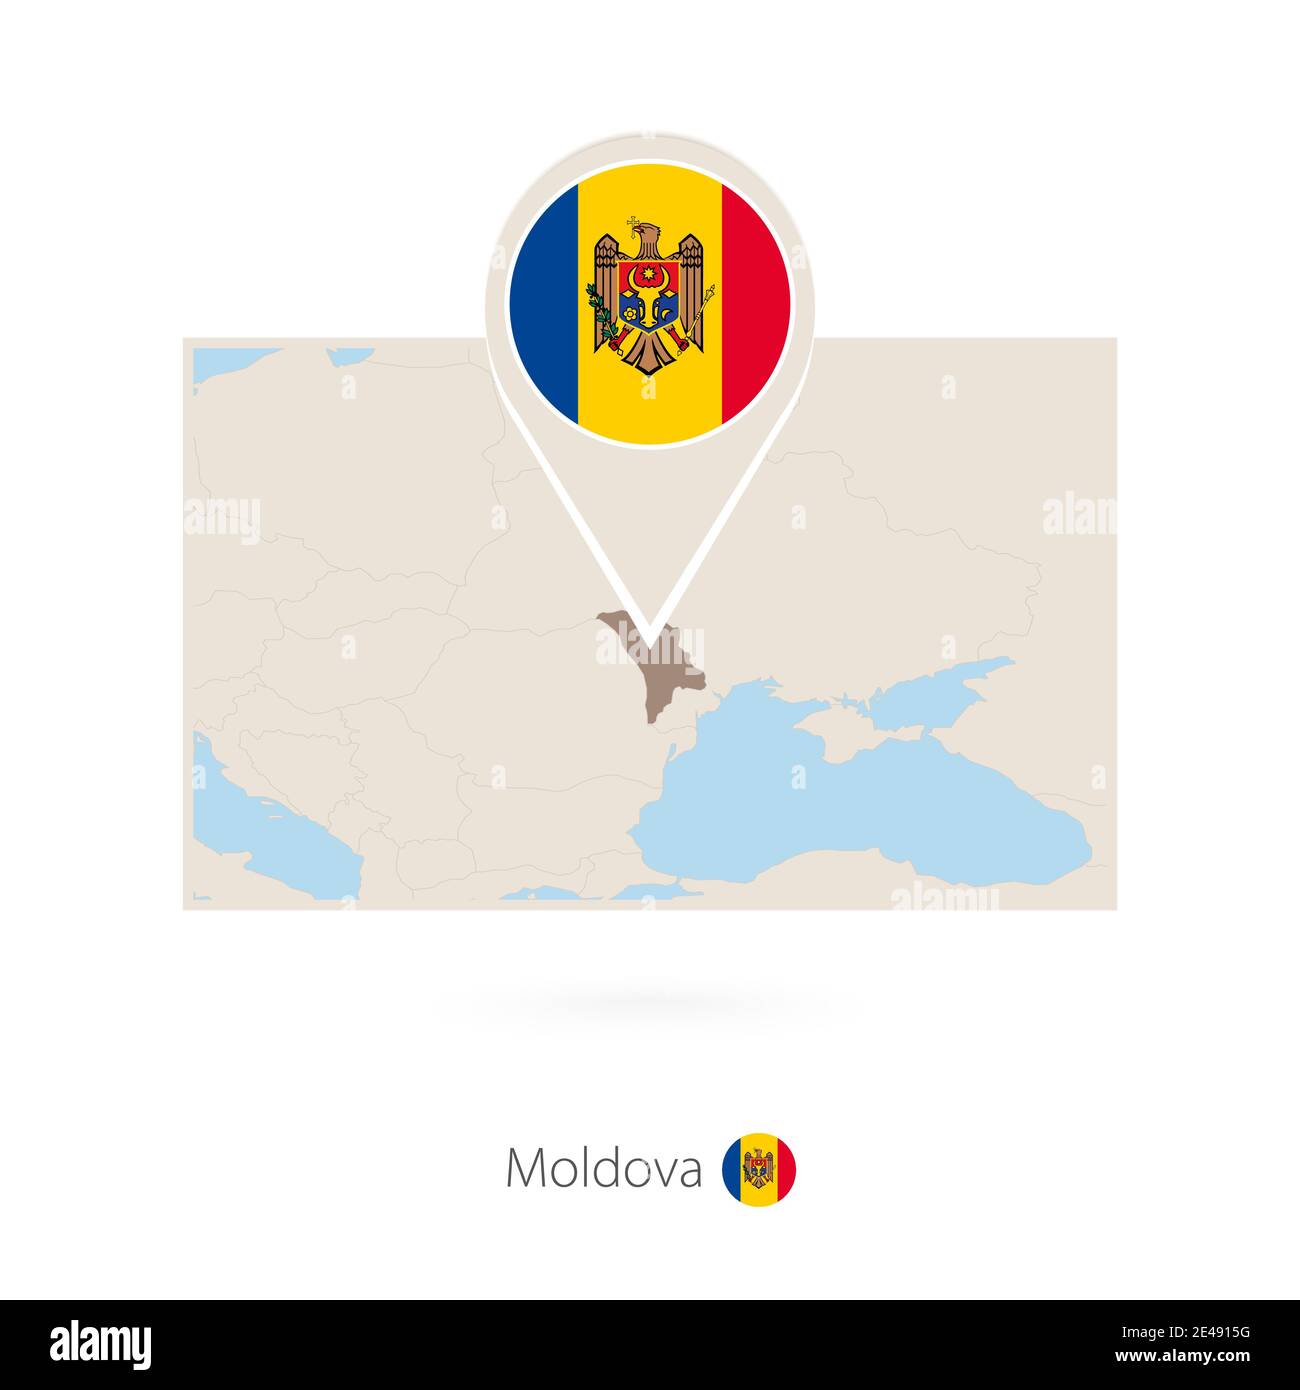 Rectangular map of Moldova with pin icon of Moldova Stock Vector